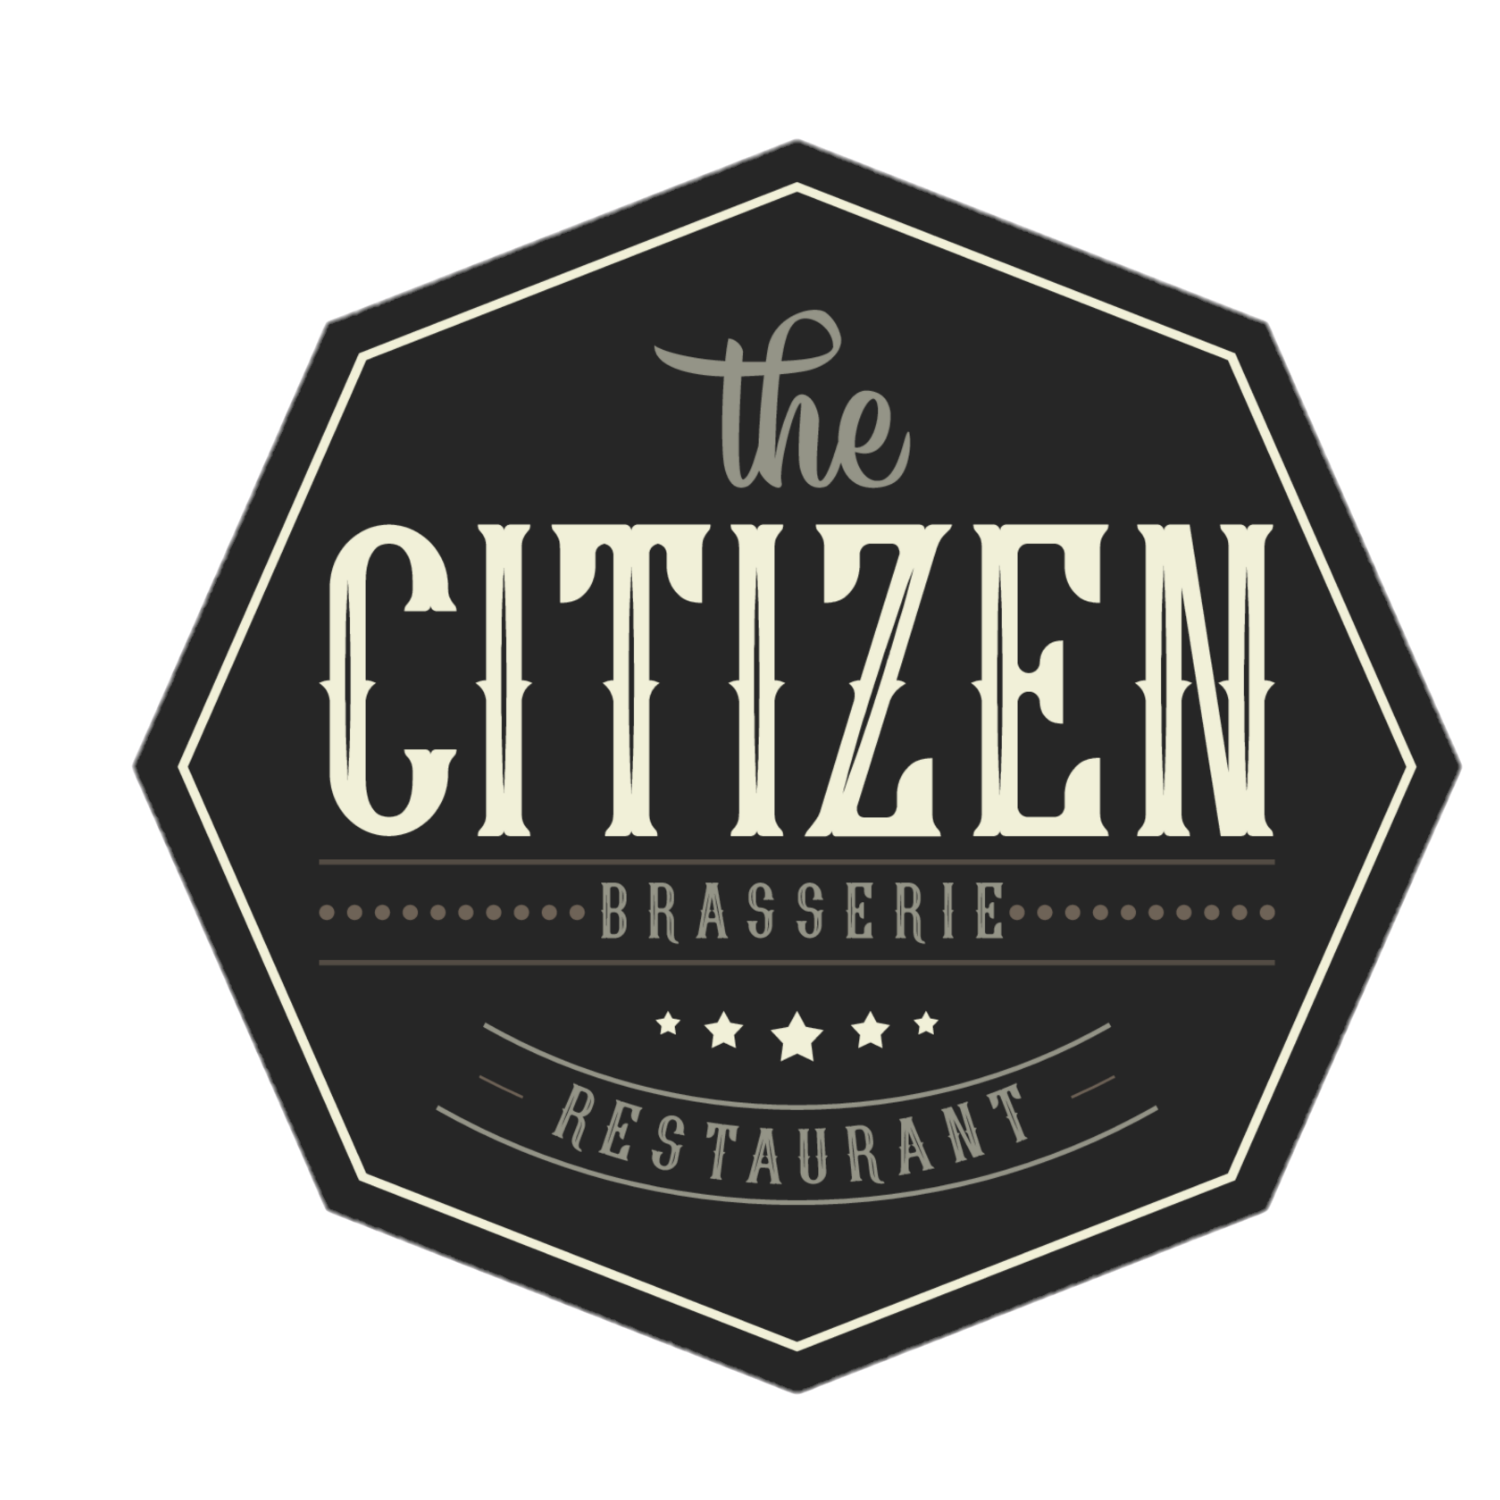 The Citizen